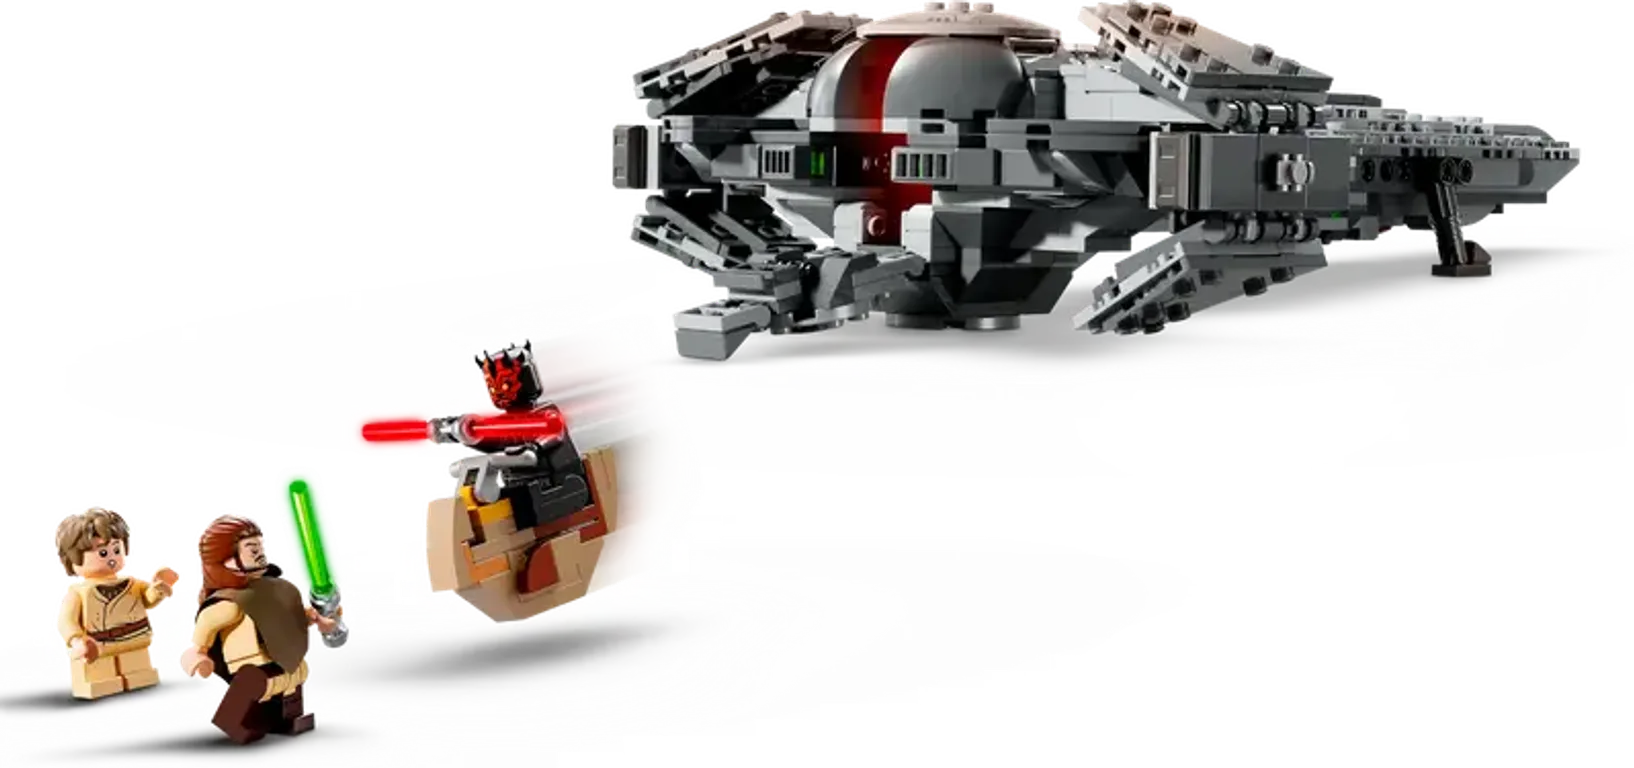 LEGO® Star Wars Darth Mauls Sith Infiltrator